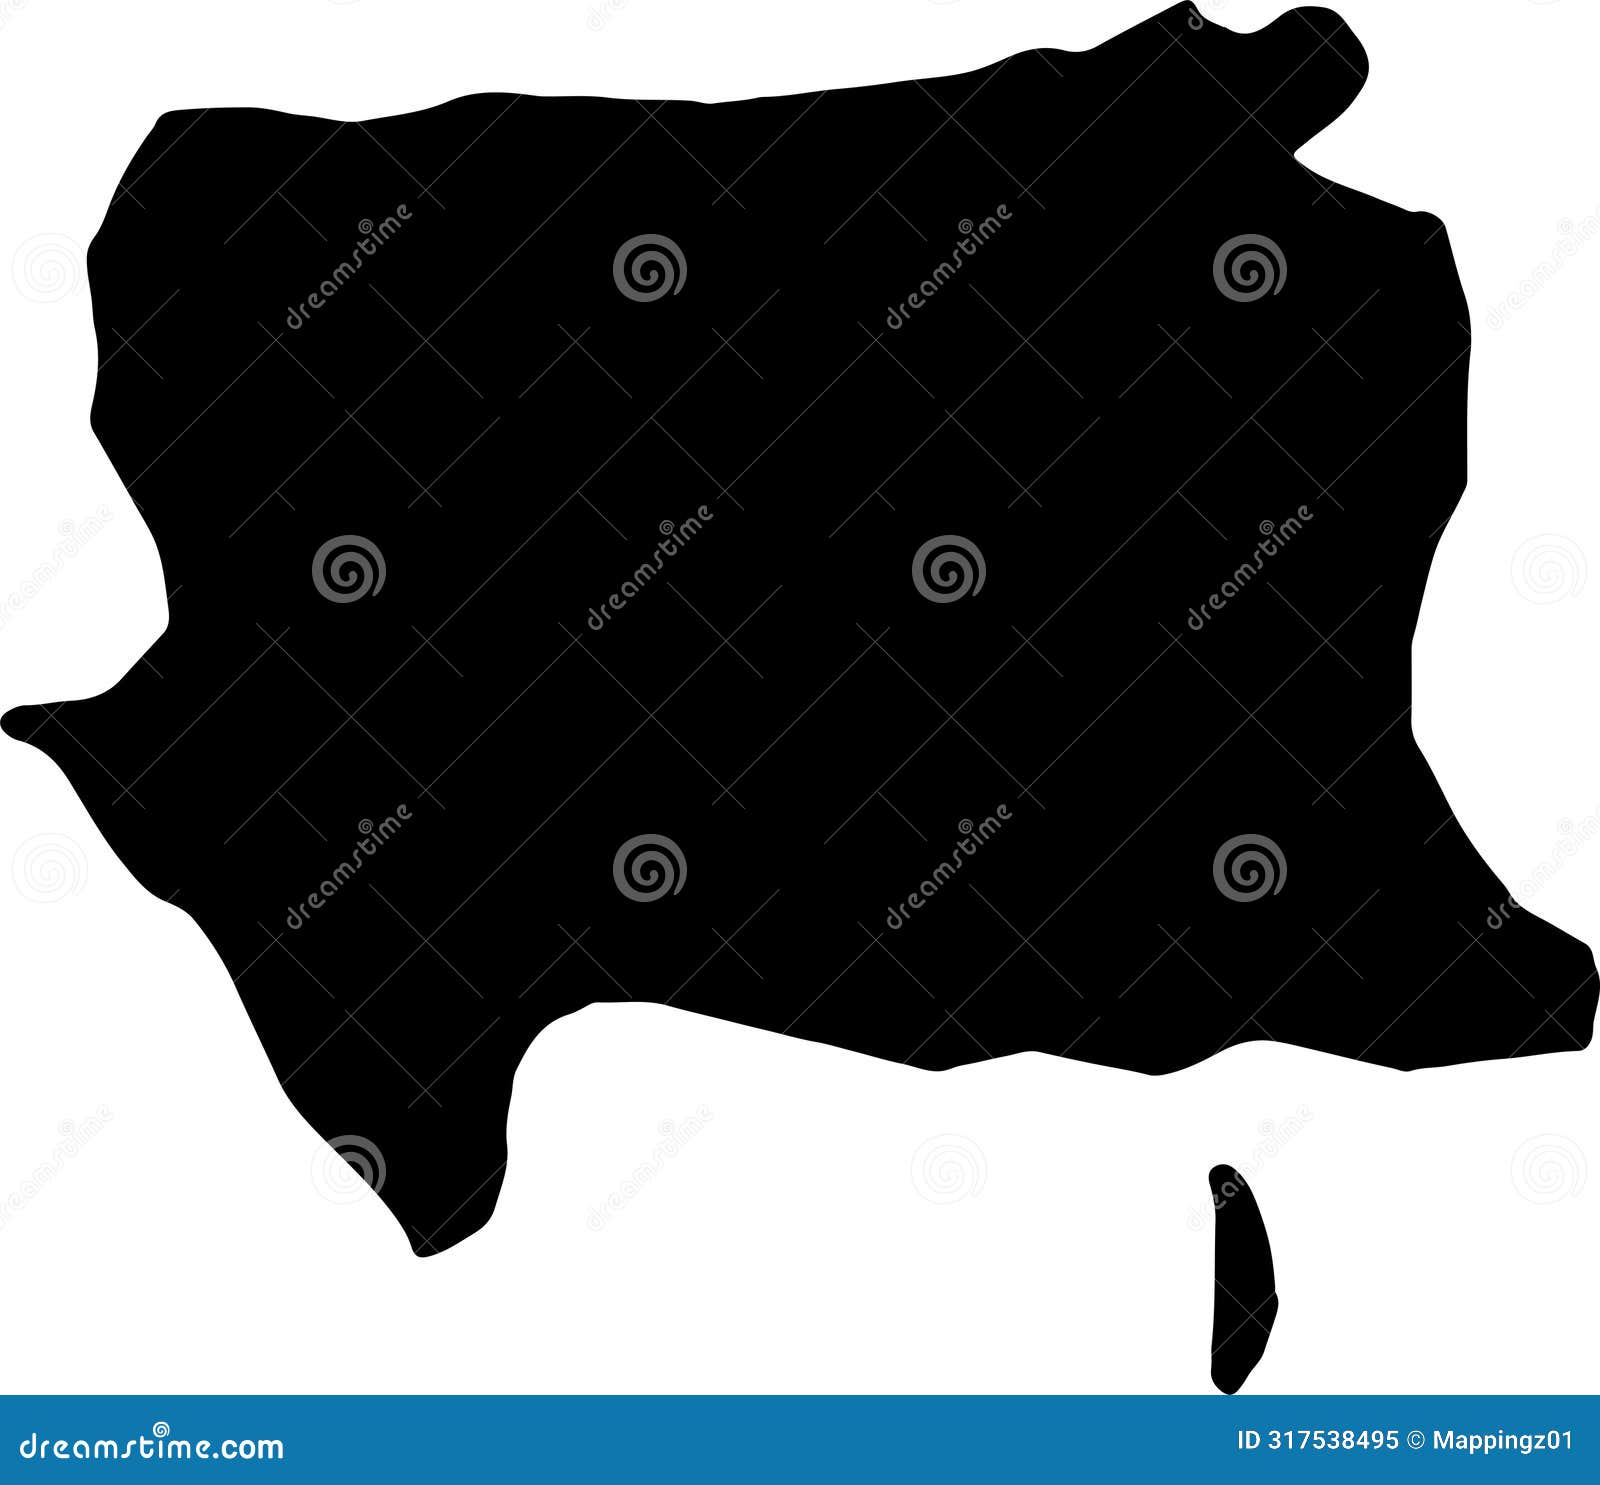 artemisa cuba silhouette map with transparent background